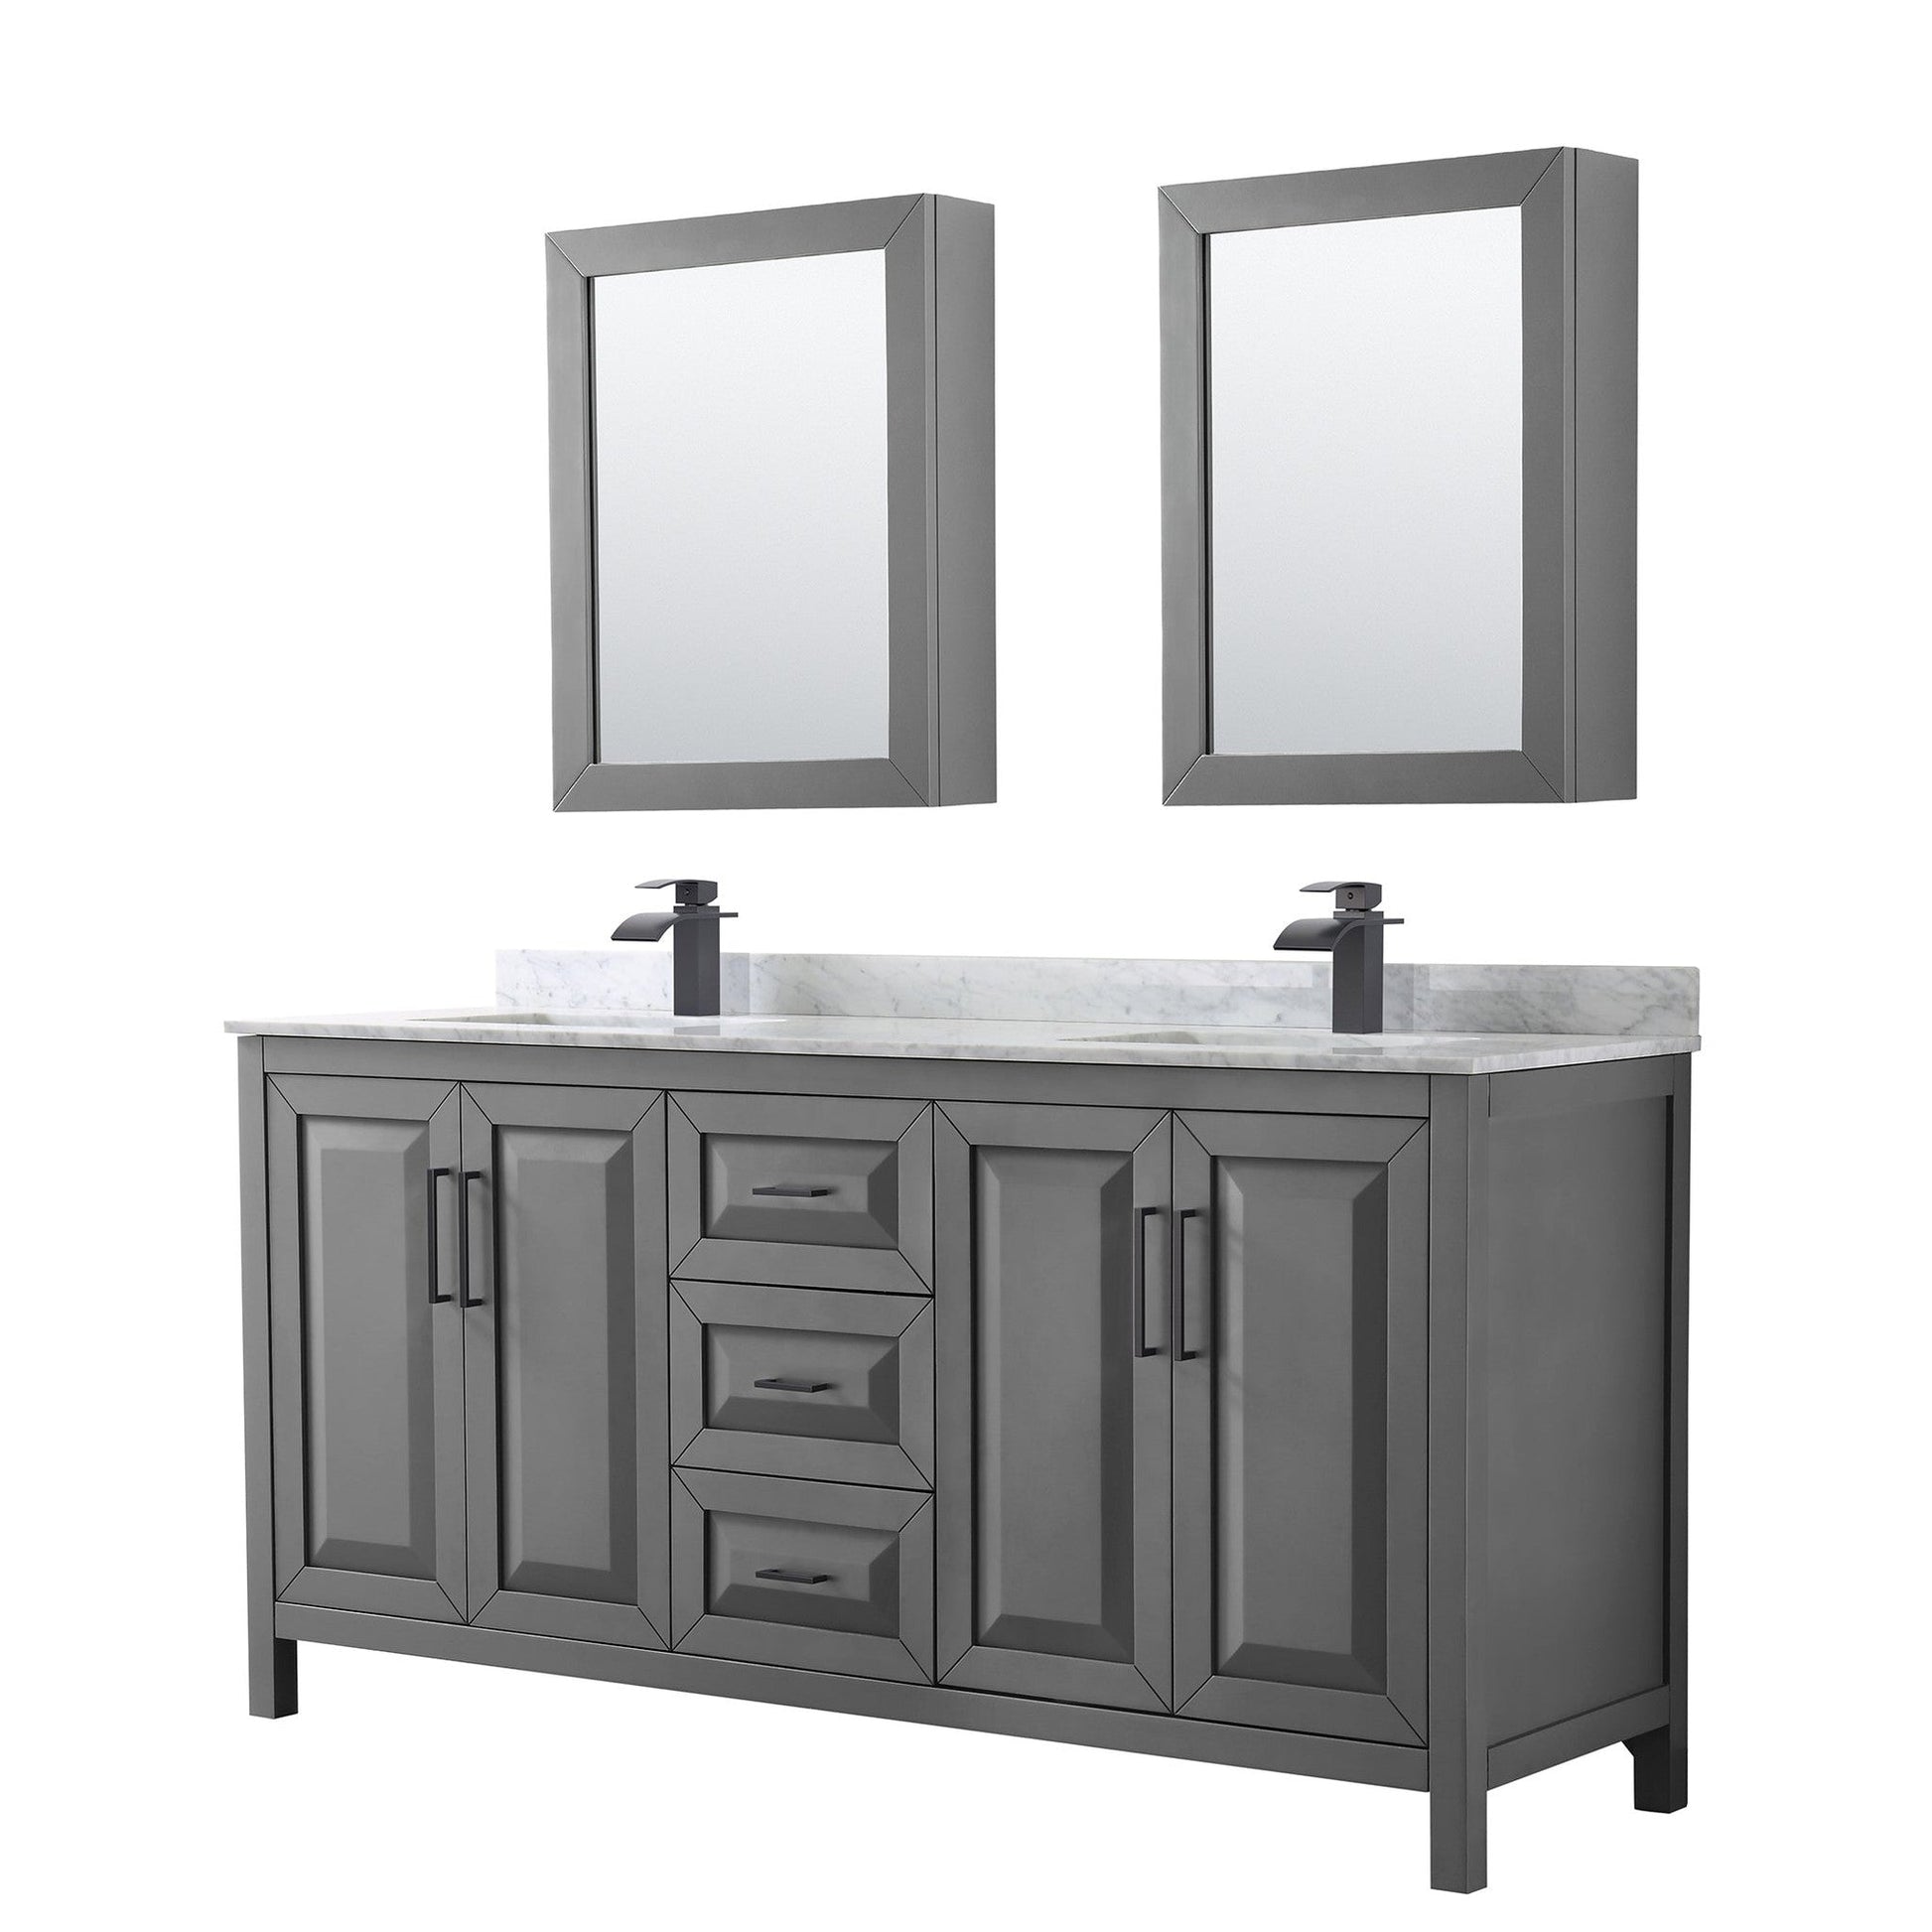 Daria 72" Double Bathroom Vanity in Dark Gray, White Carrara Marble Countertop, Undermount Square Sinks, Matte Black Trim, Medicine Cabinets